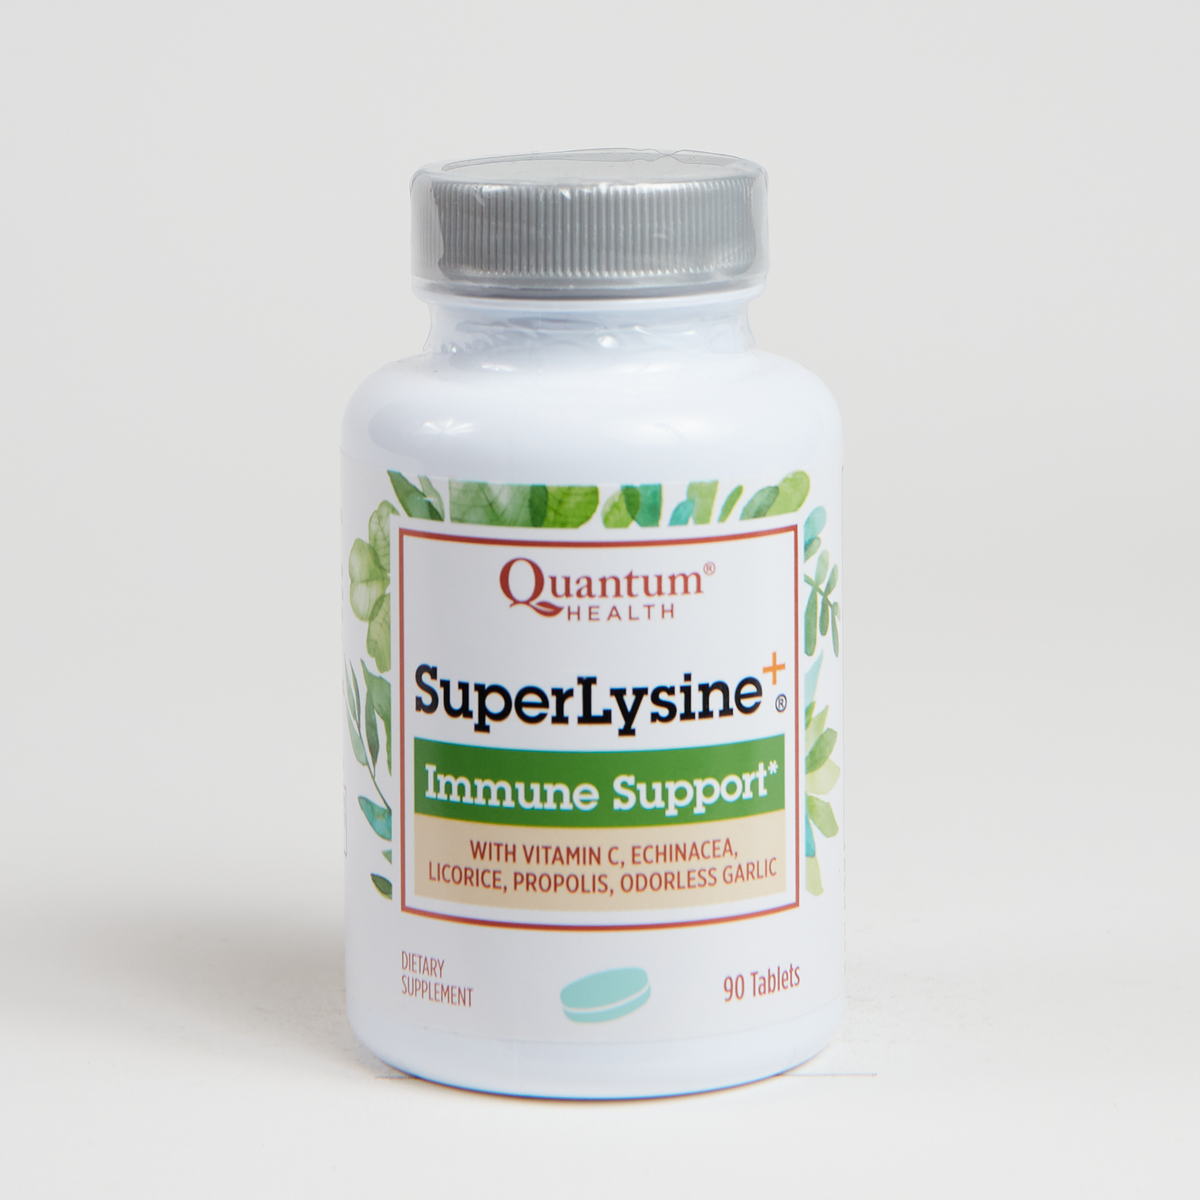 Quantum Health Super Lysine+ Tablets - 90 Count